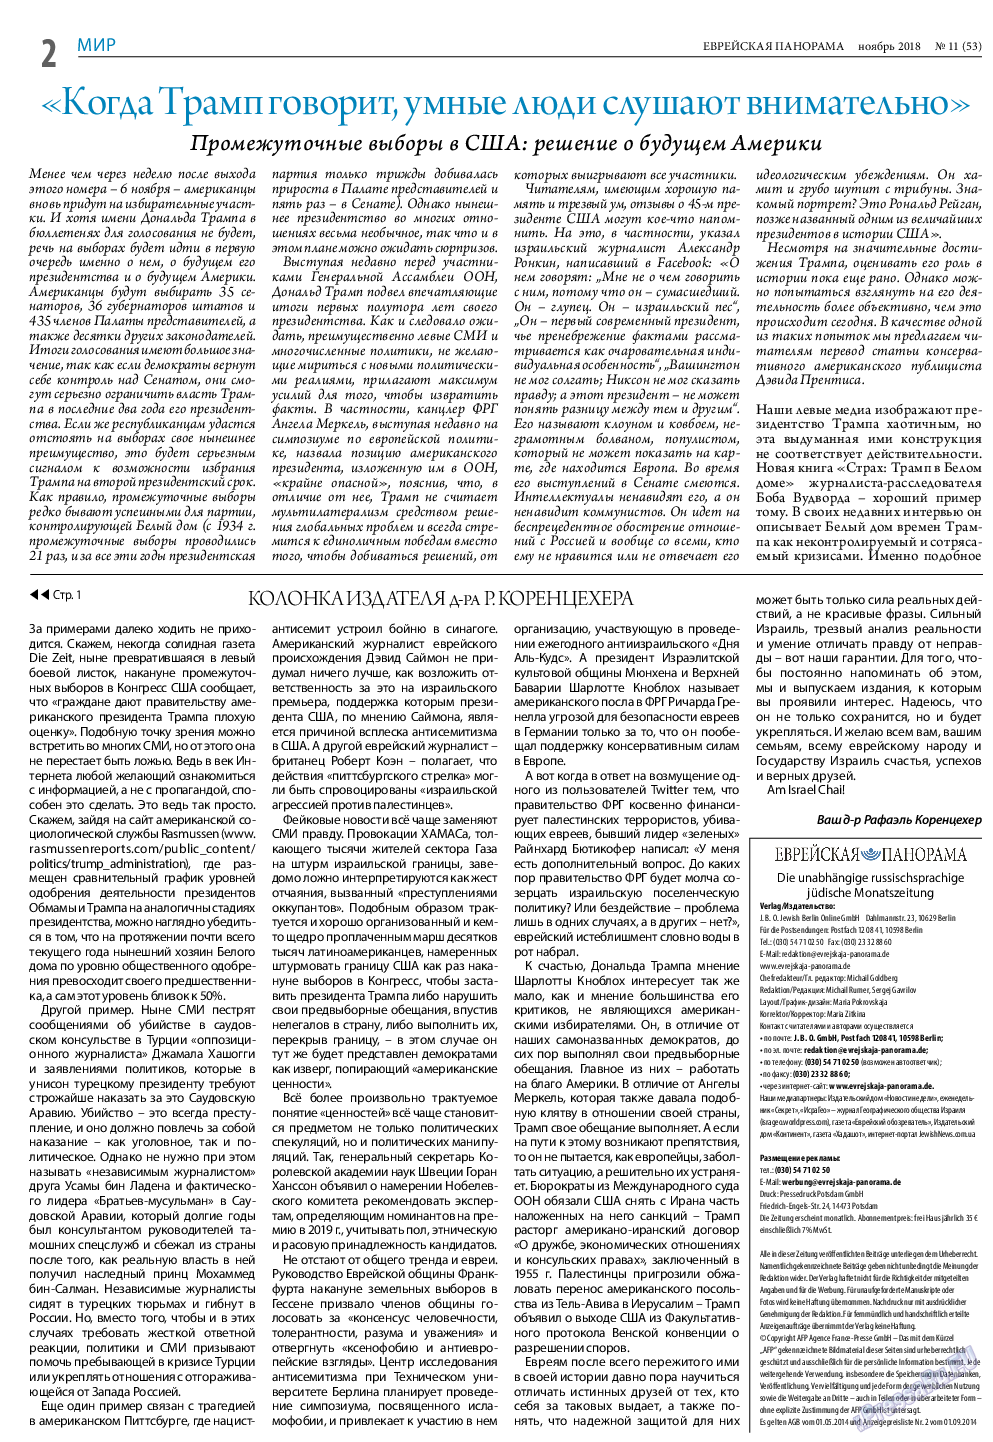 Еврейская панорама, газета. 2018 №11 стр.2